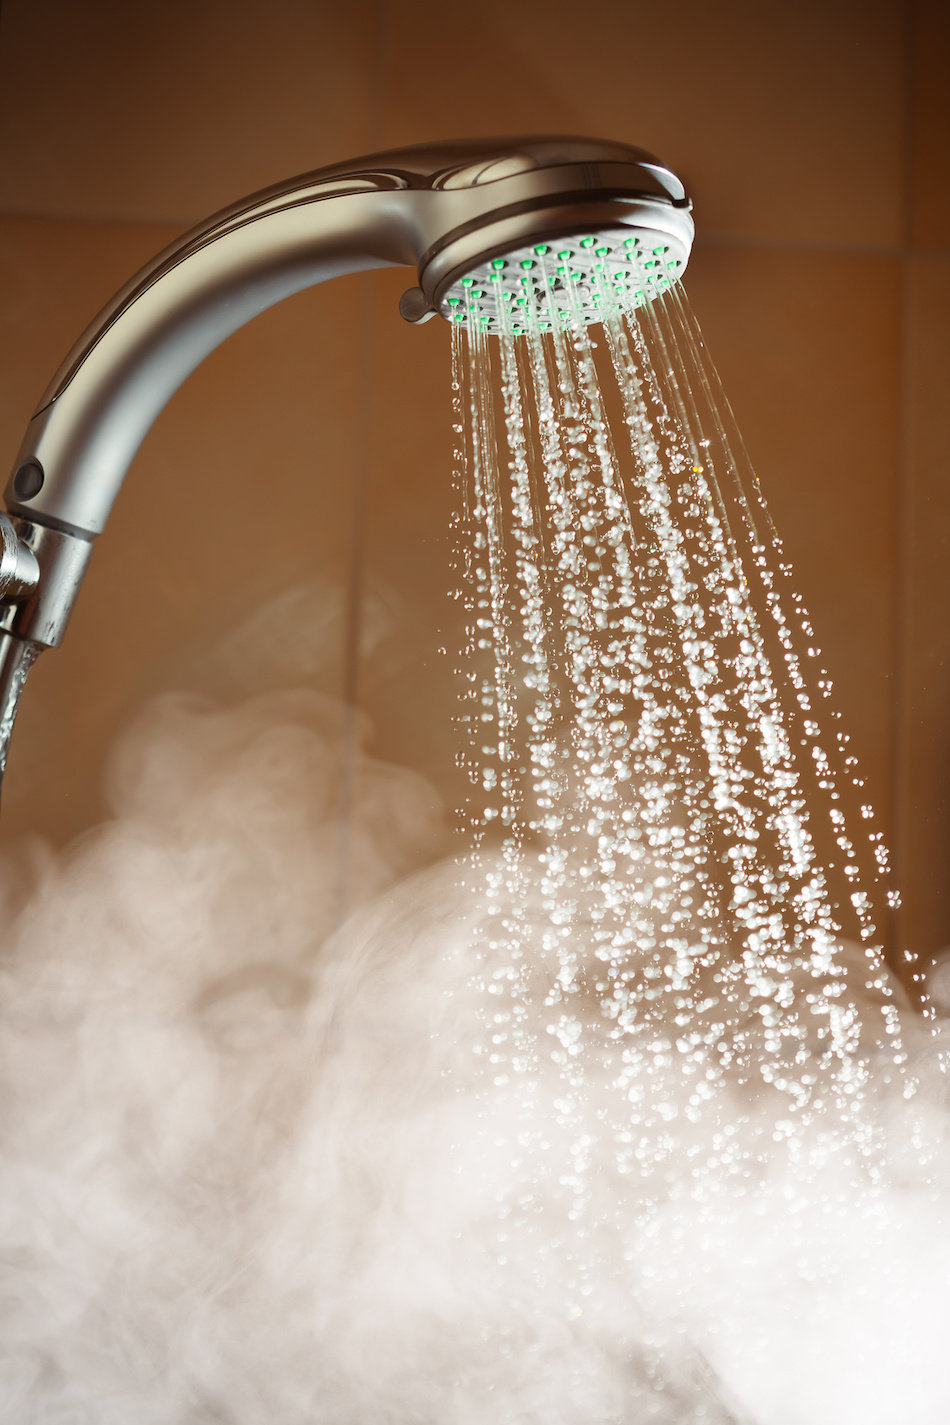 Steamy Shower Increasing Indoor Humidity